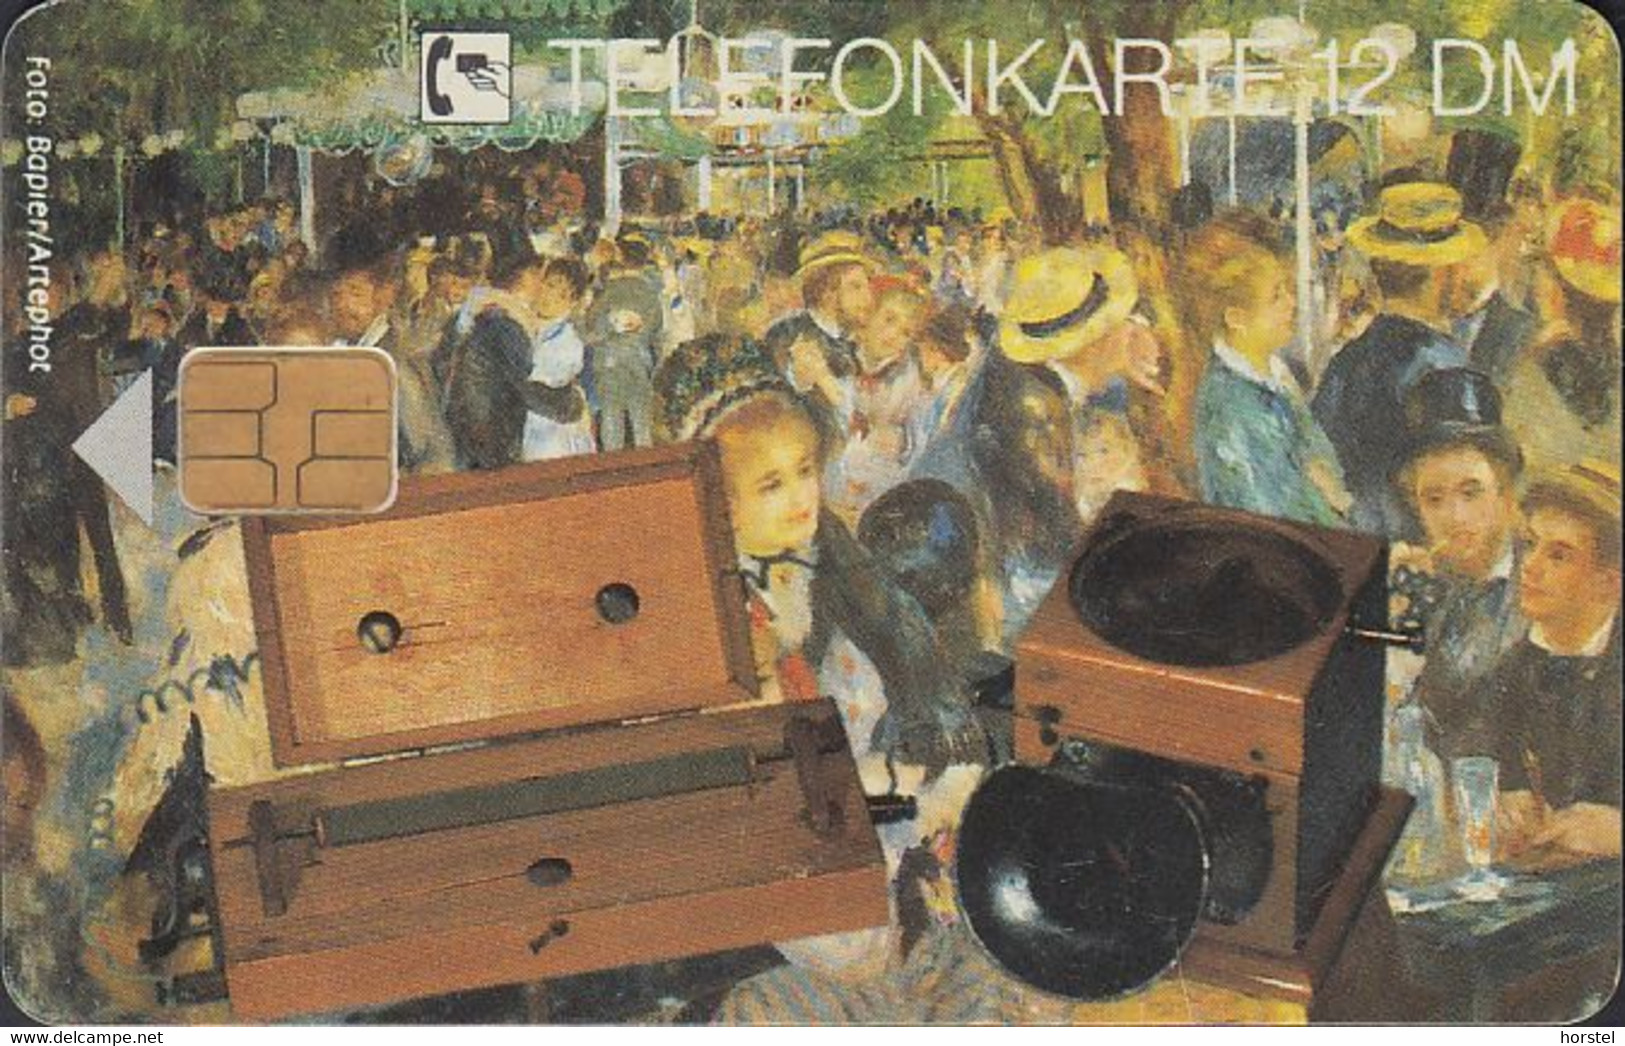 GERMANY E05-08/92 - Telefon Edition 1992 - Mint - E-Series: Editionsausgabe Der Dt. Postreklame